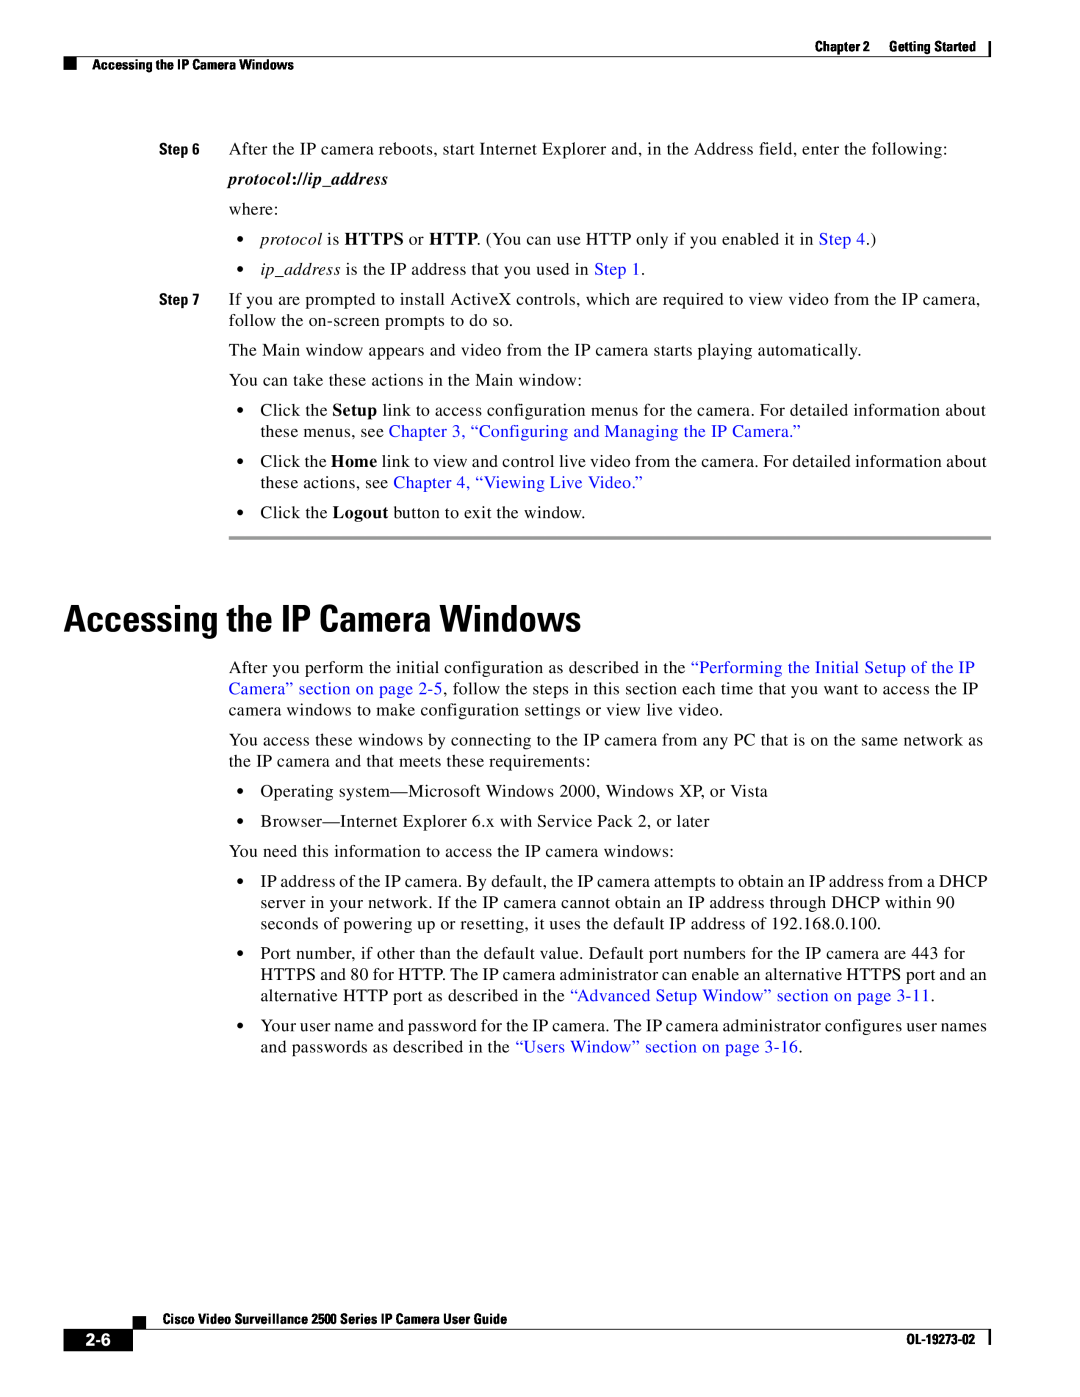 Cisco Systems 2500 Series, CIVS-IPC-2500 manual Accessing the IP Camera Windows, protocol//ipaddress 